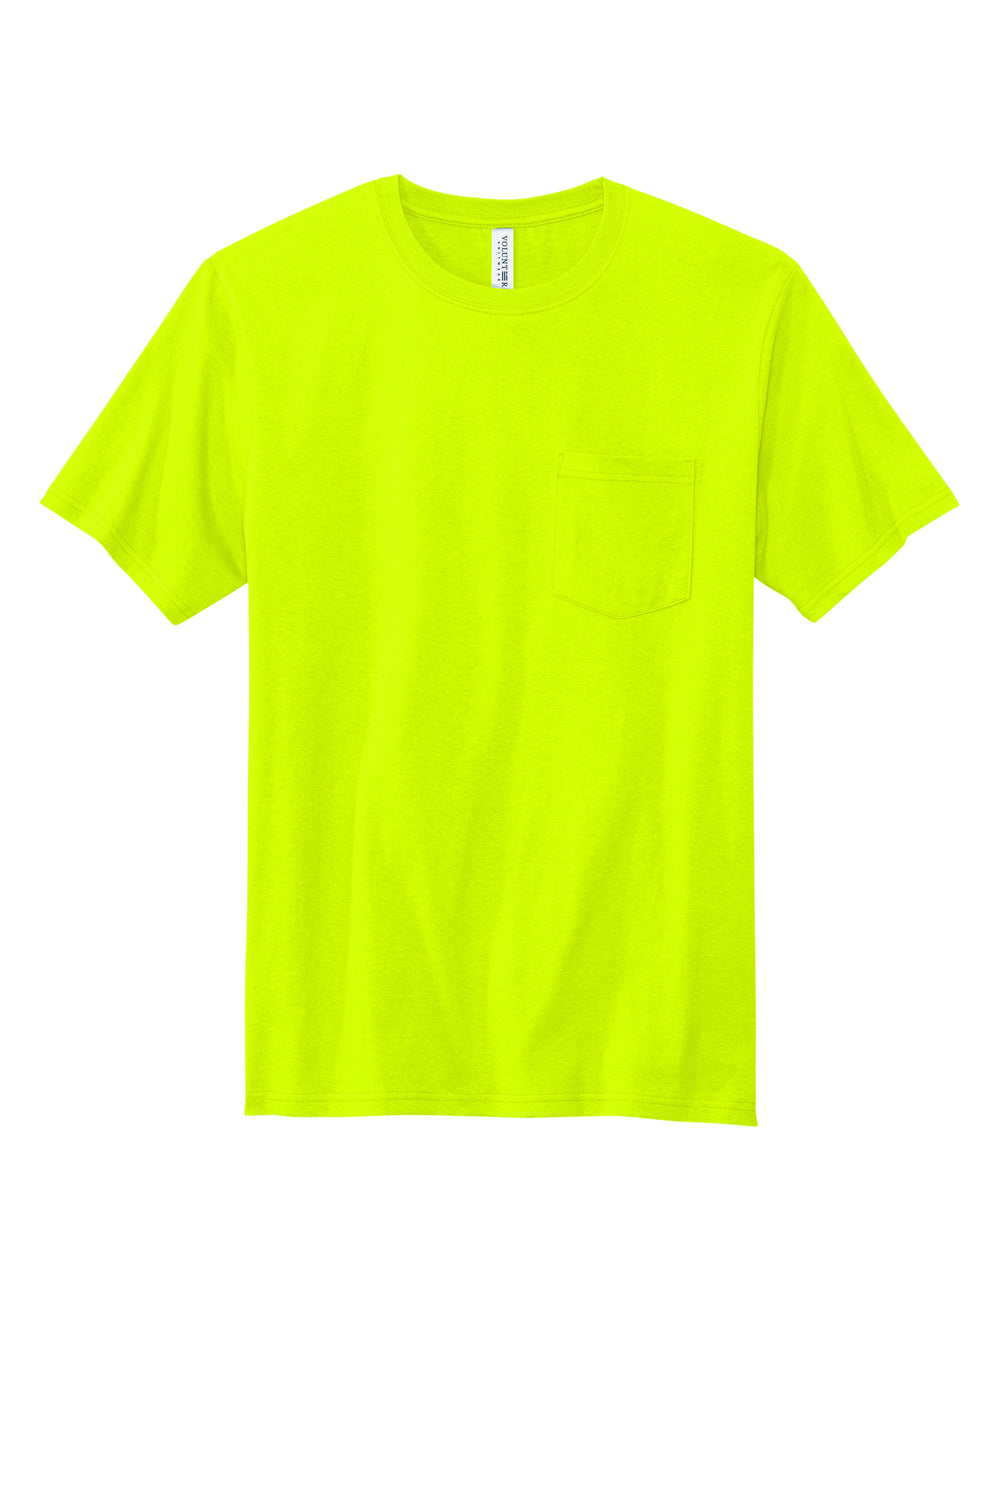 Volunteer Knitwear VL100P USA Made All American Short Sleeve Crewneck T-Shirt w/ Pocket Safety Green Flat Front